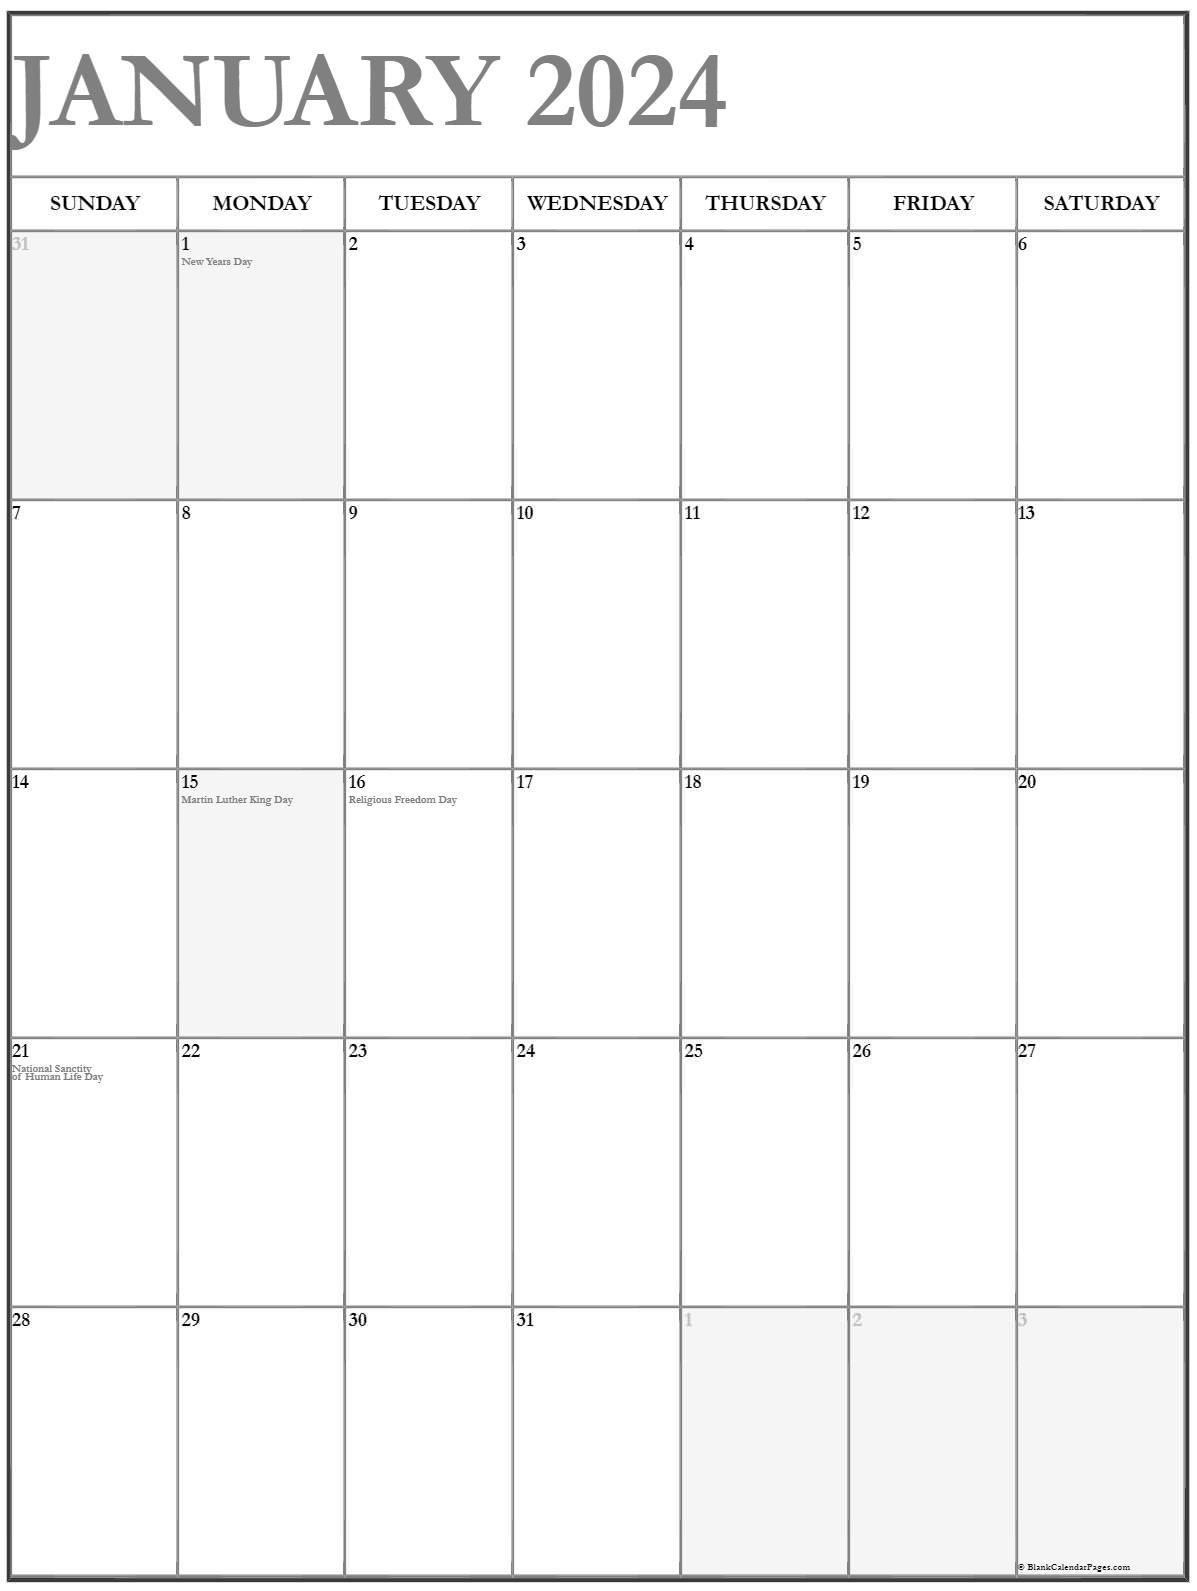 january 2024 calendar free printable calendar - january 2024 calendar free printable calendar 